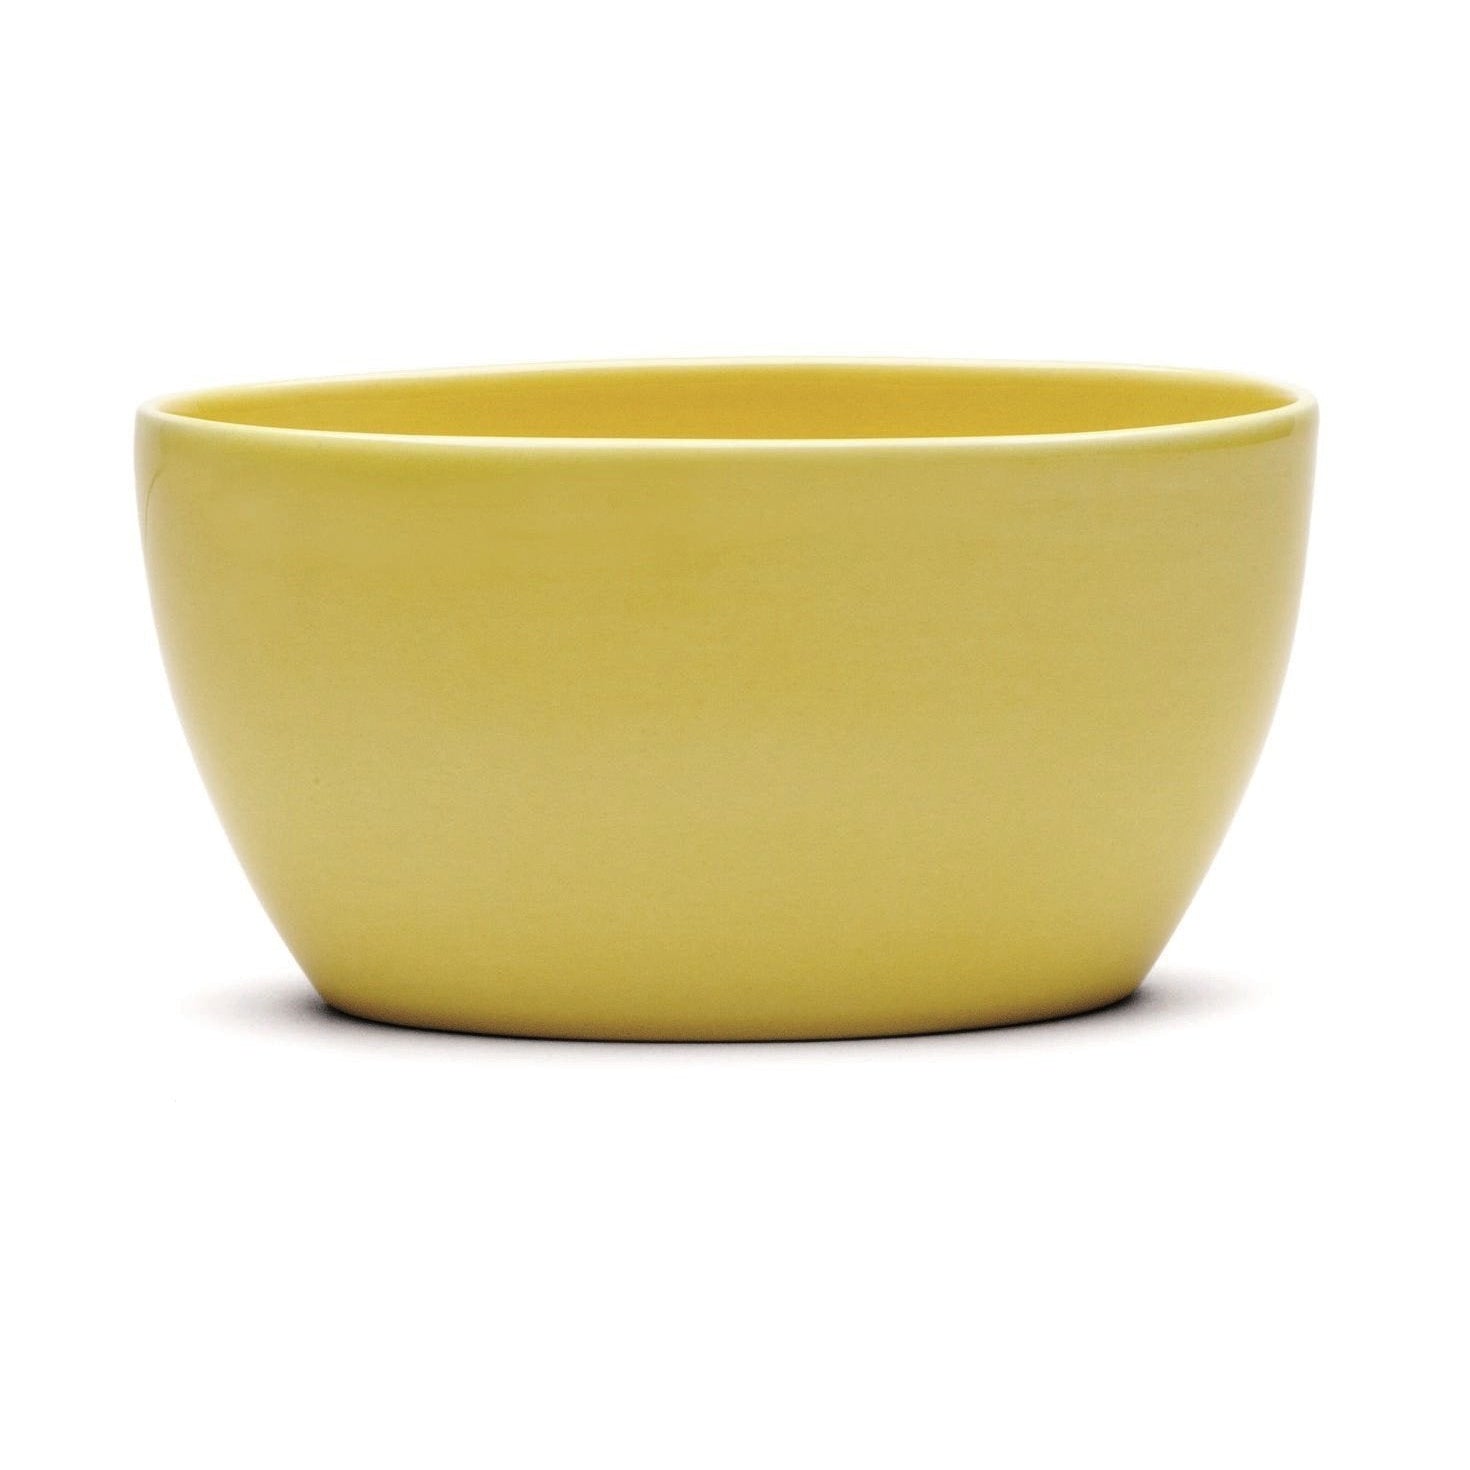 Kähler Ursula Bowl jaune, moyen